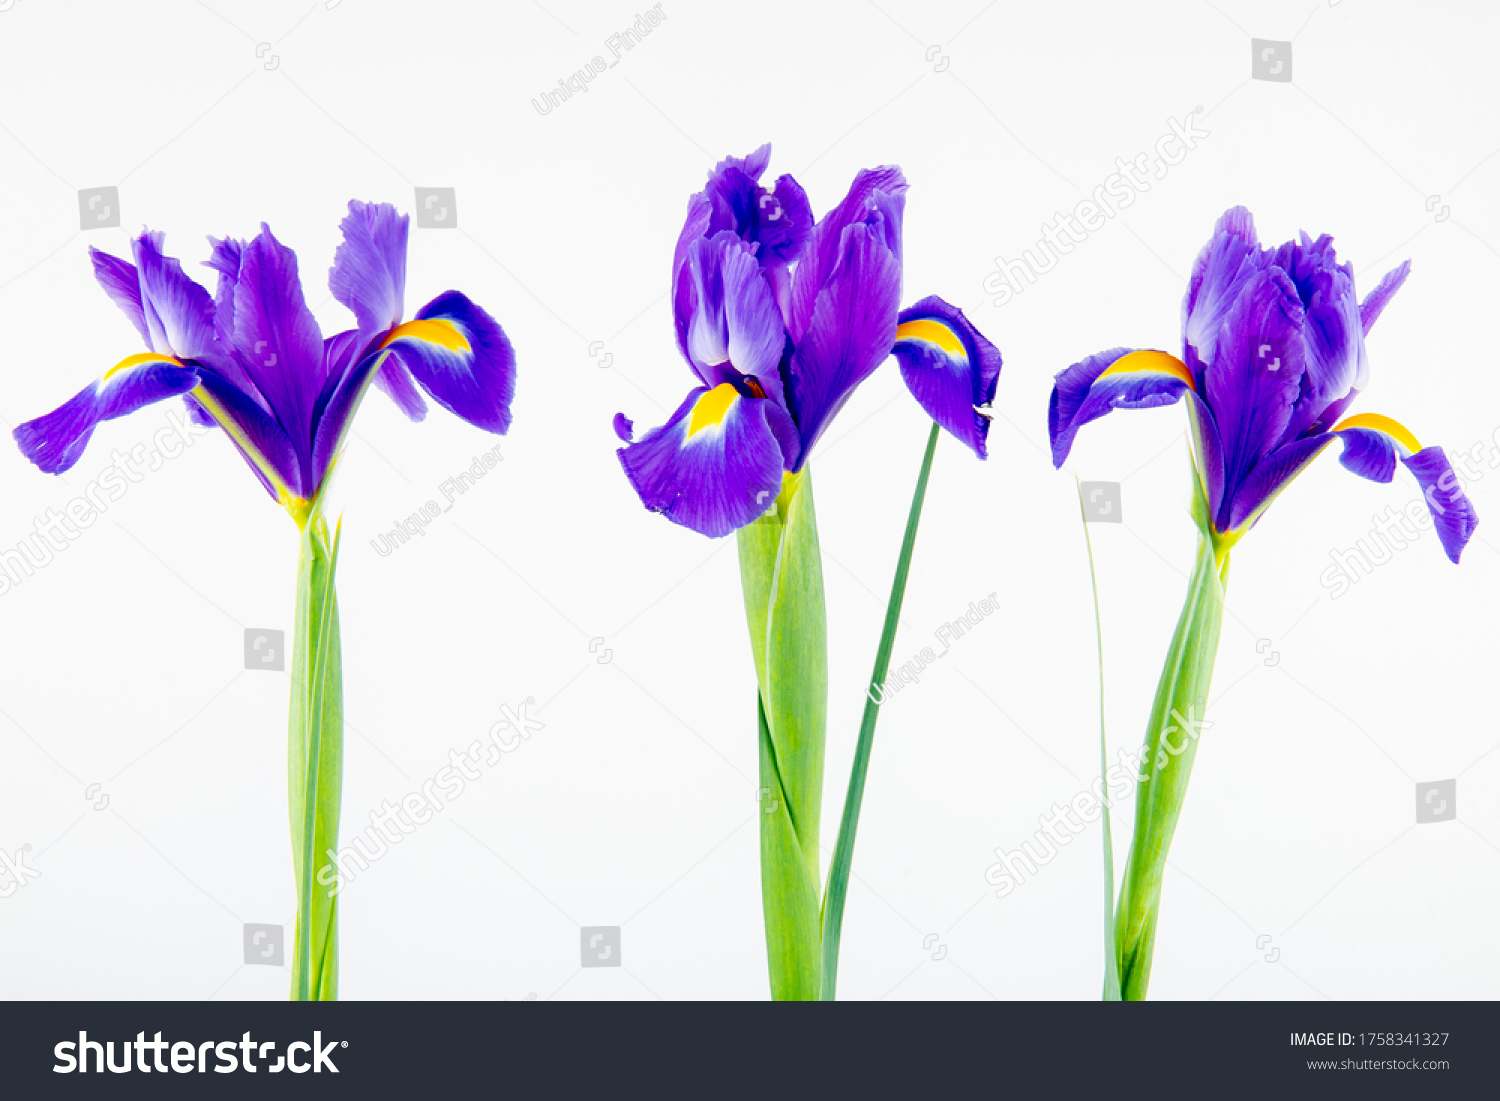 Three Iris Flowers Isolated On White Stock Photo 20 ...